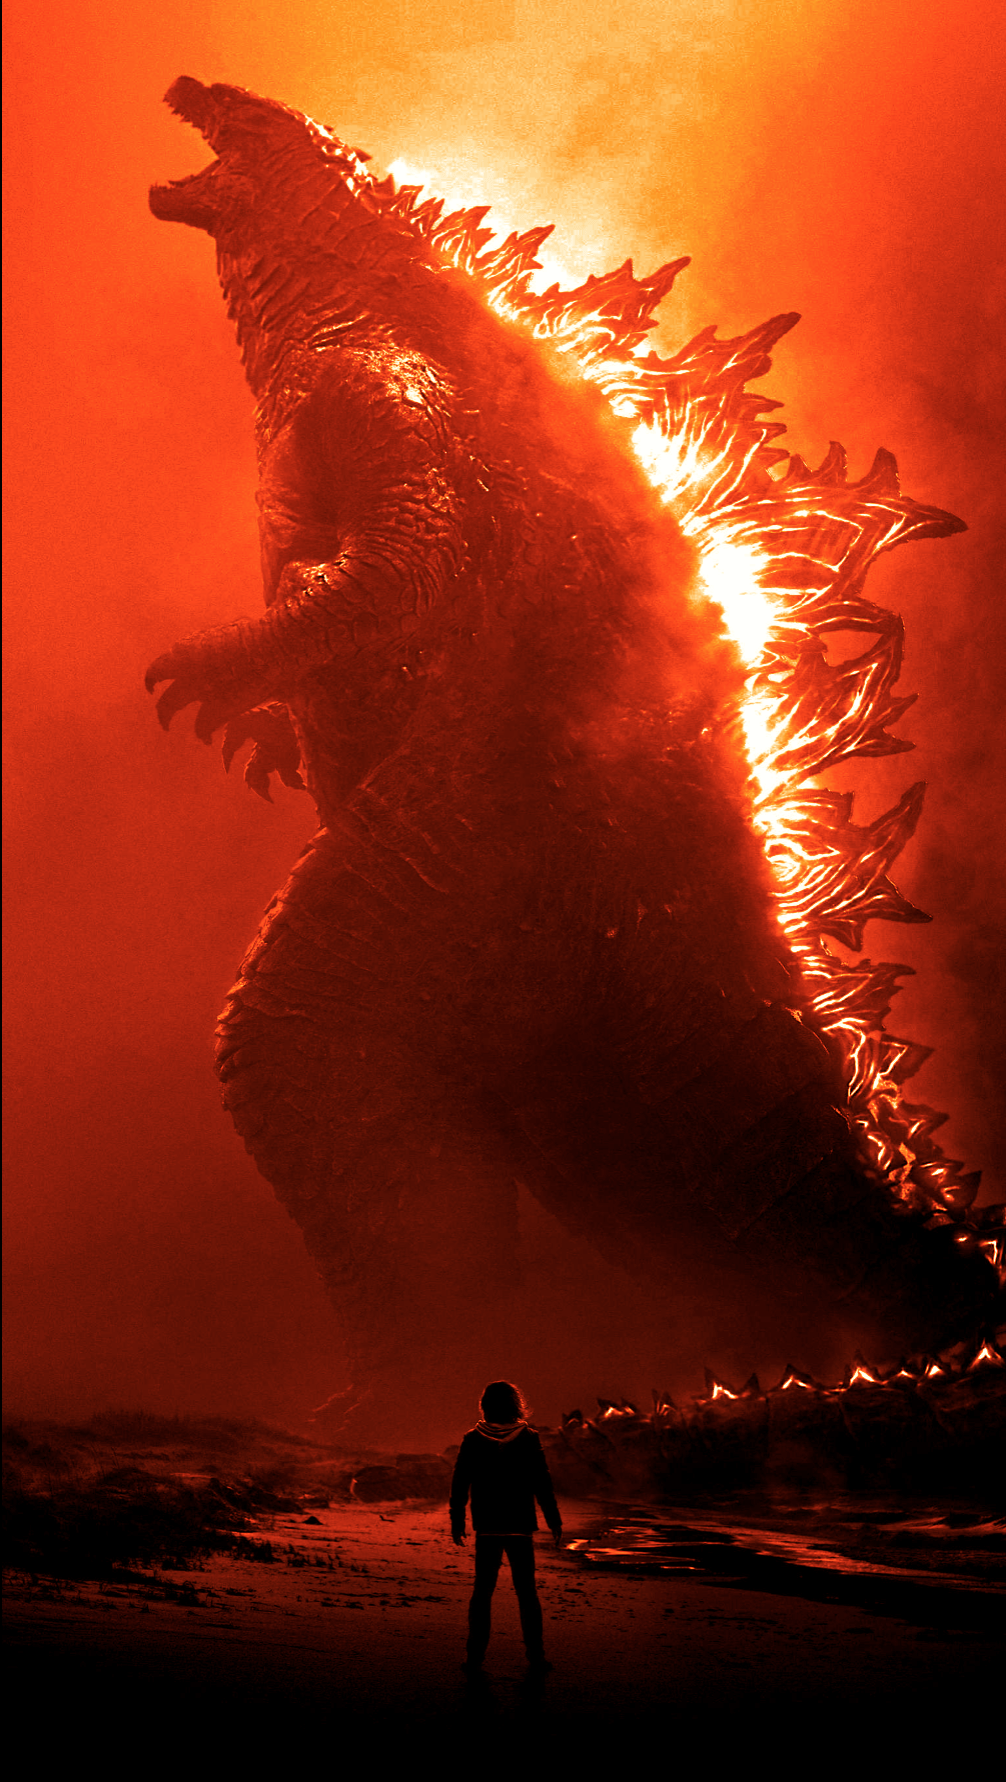 Godzilla 4k Wallpaper HD. Godzilla wallpaper, All godzilla monsters, Godzilla